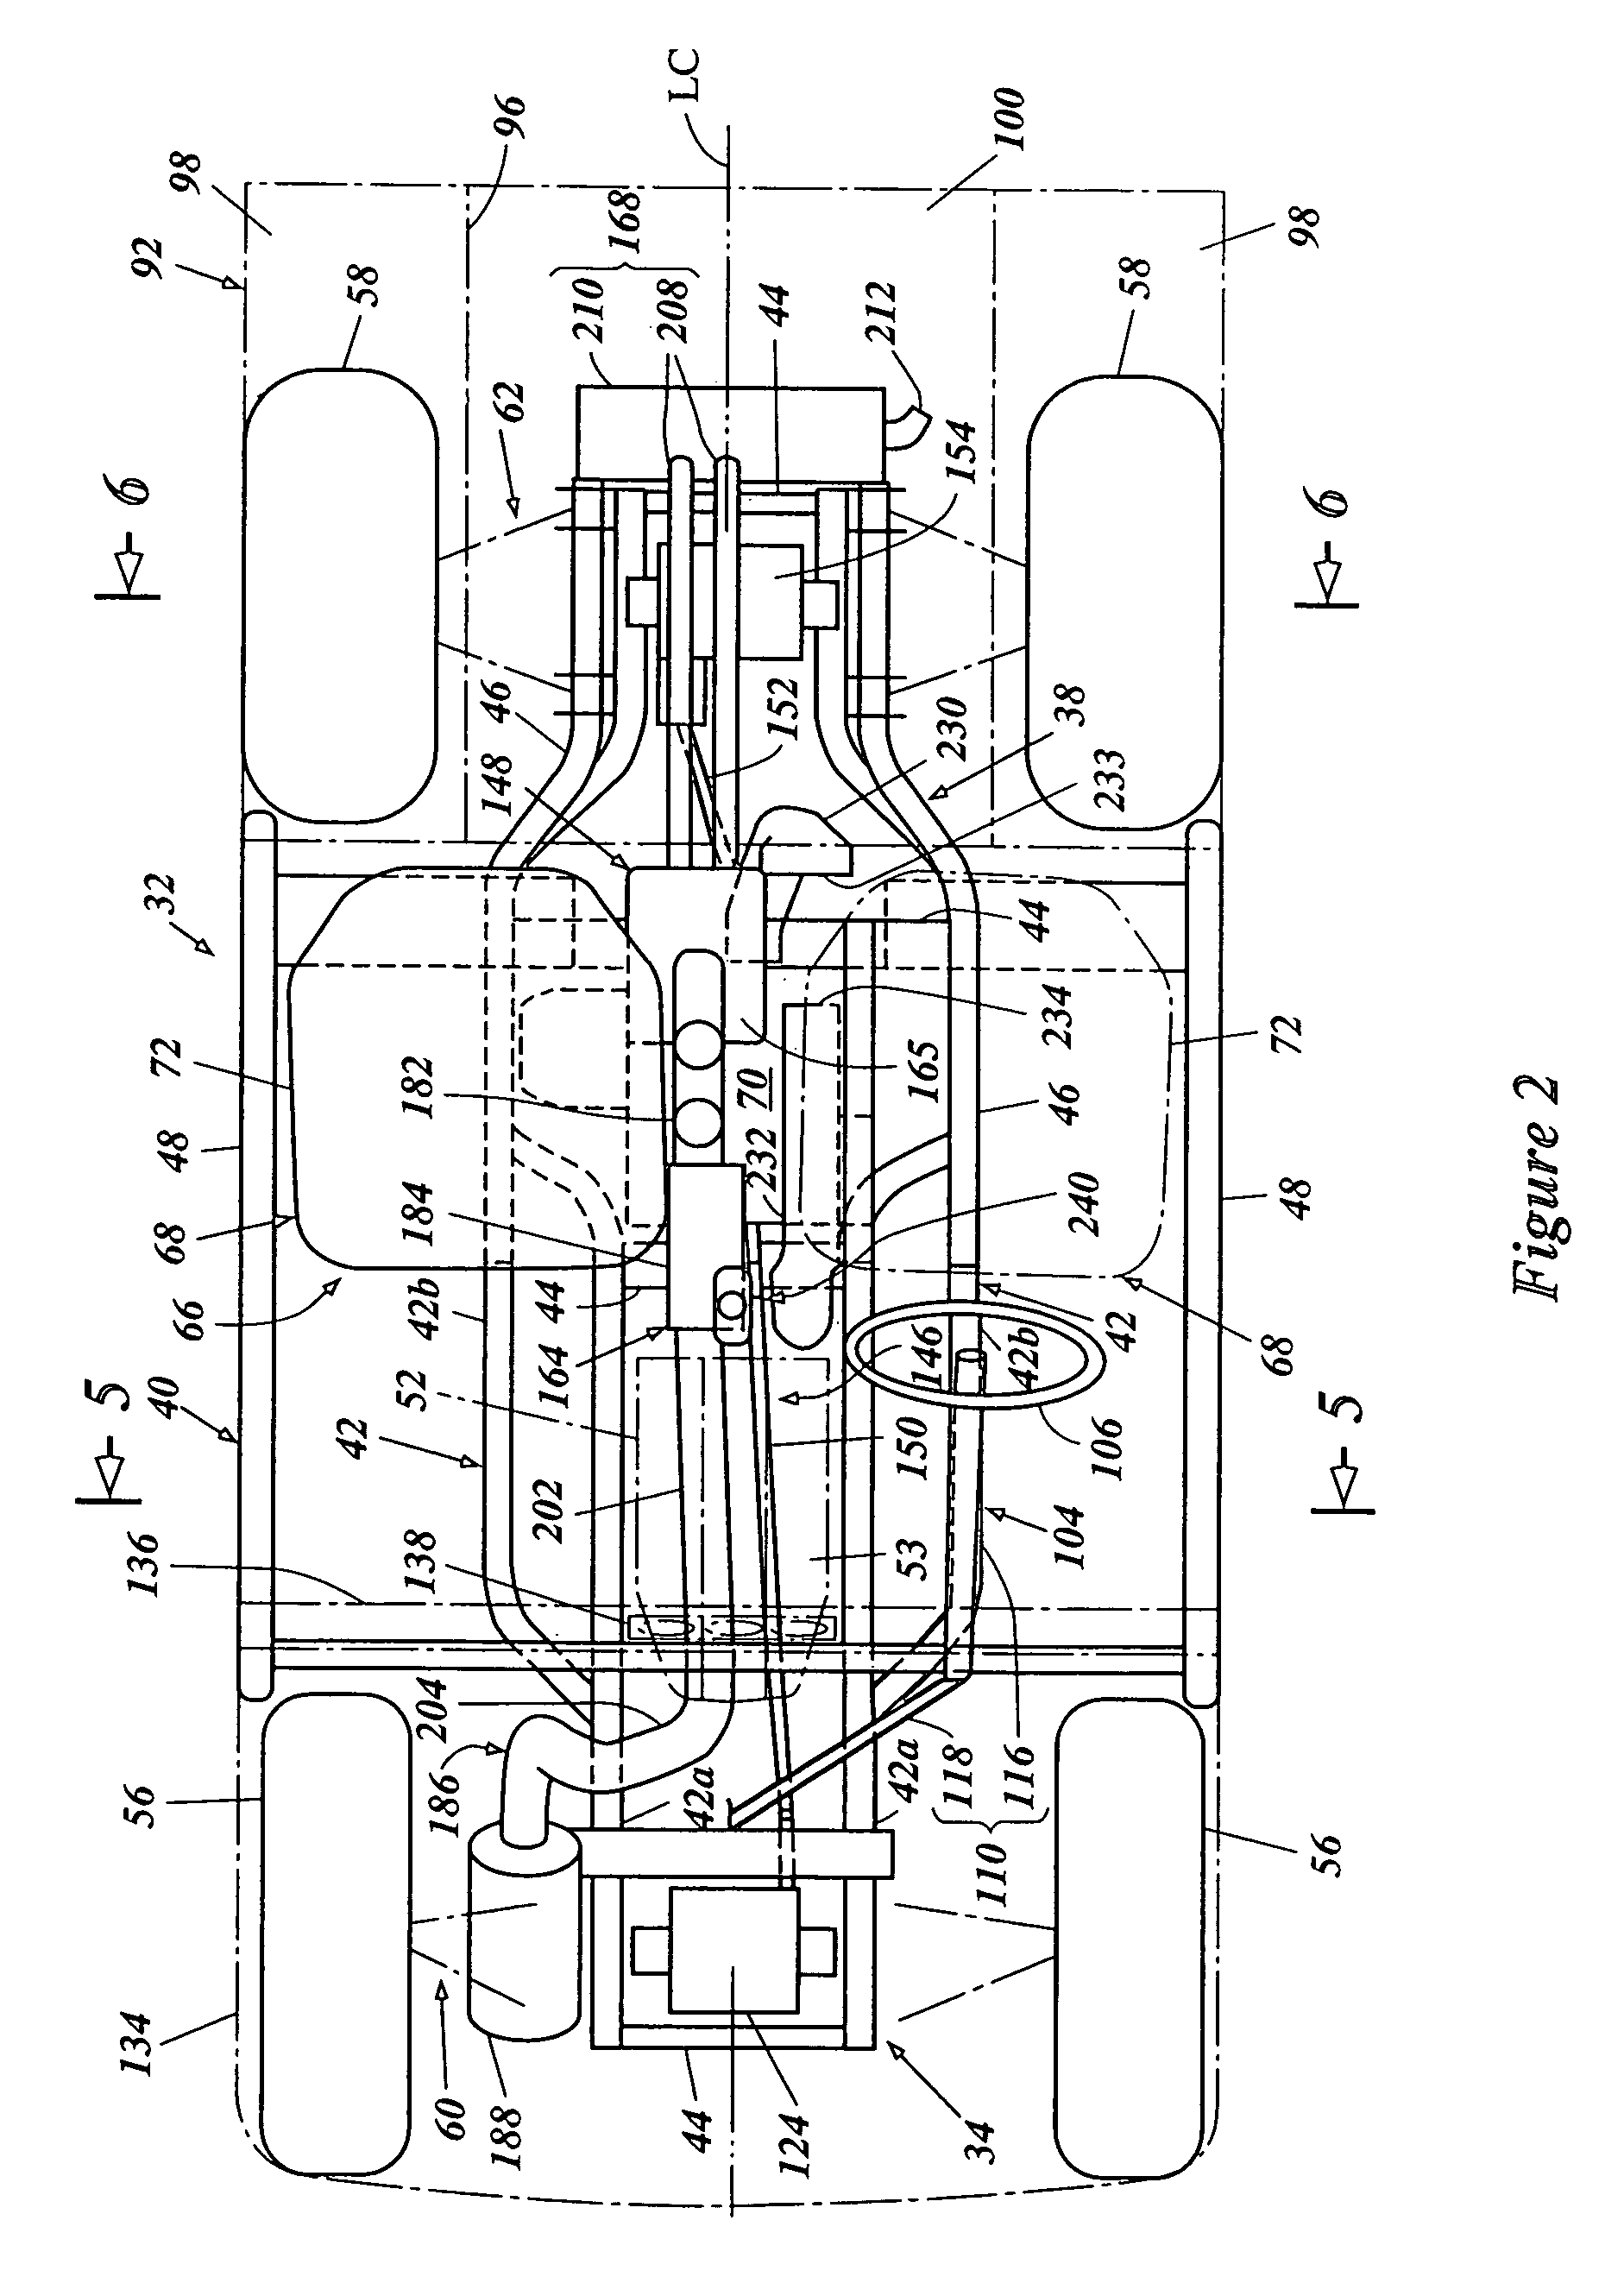 Engine arrangement for off-road vehicle